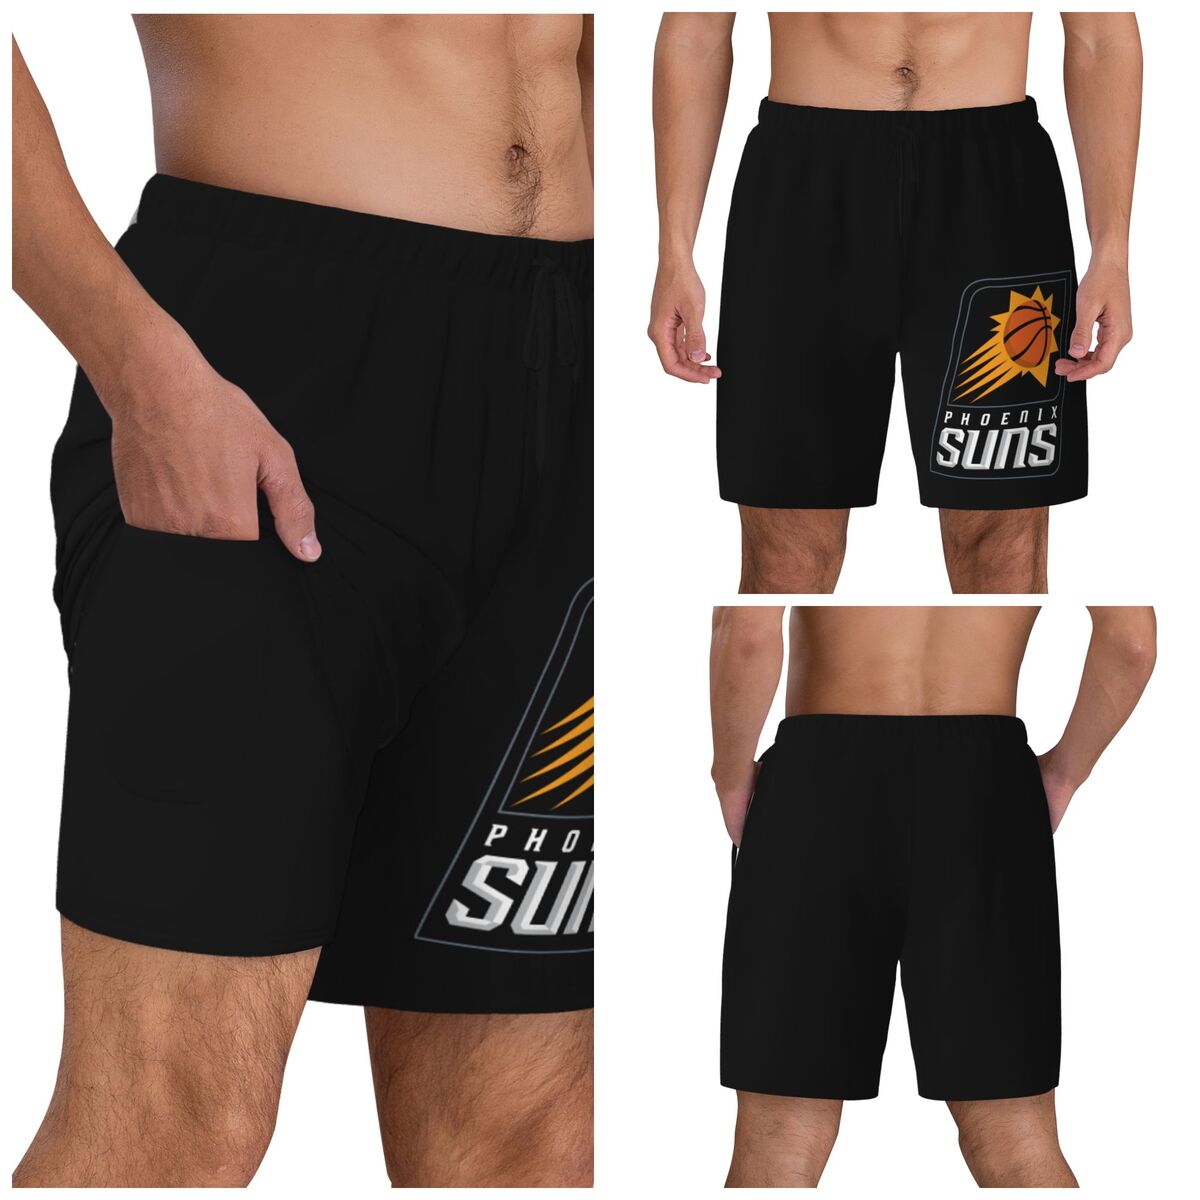 Phoenix Suns Logo Men's Swim Trunks with Compression Liner